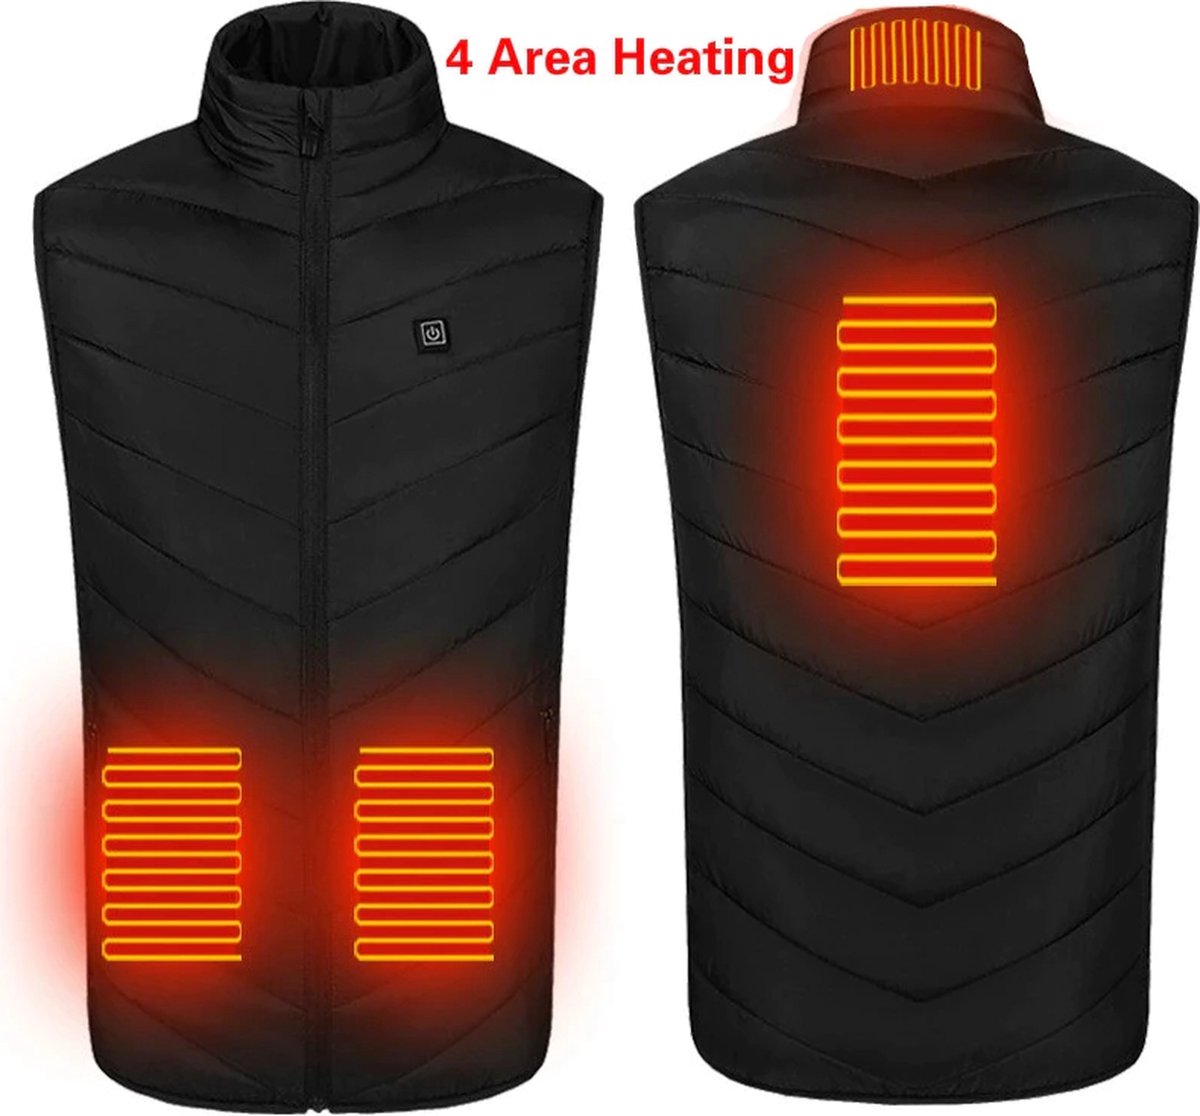 verwarmde bodywarmer - verwarmd vest - warmte vest - elektrisch verwarmd vest - verwarmde kleding - verwarmde jas - thermo vest - S